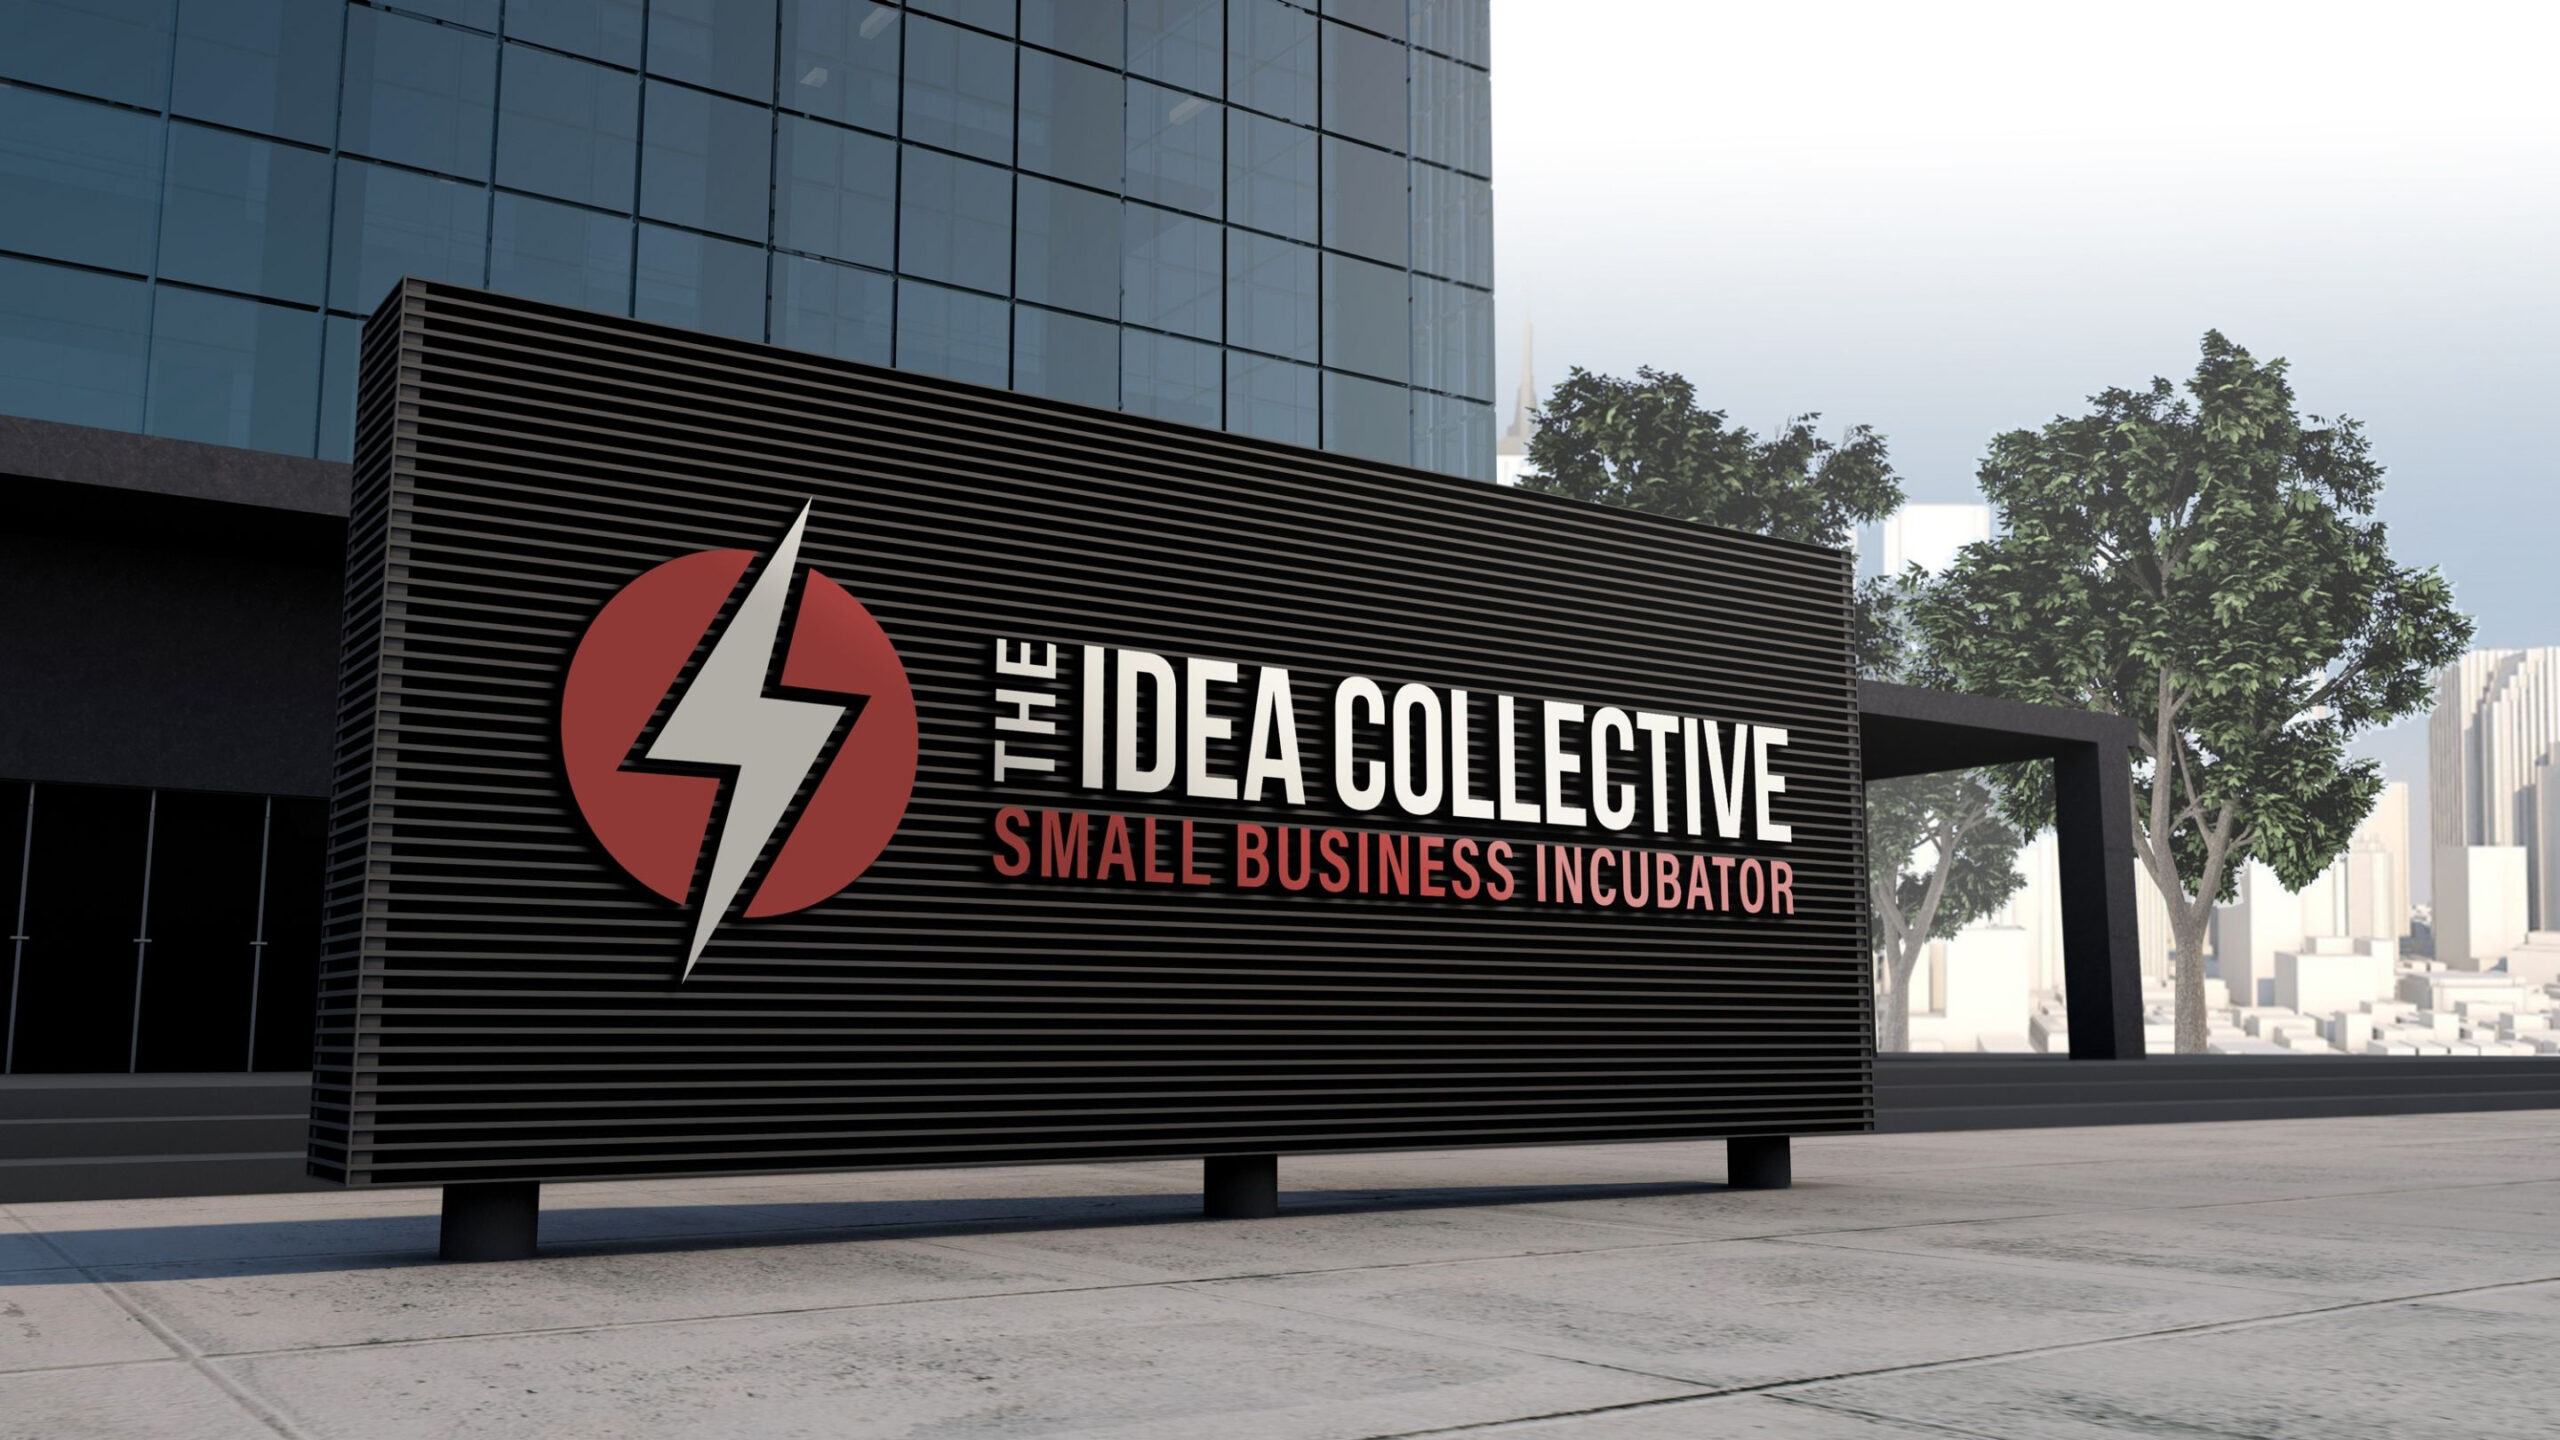 The Idea collective Small Business Incubator